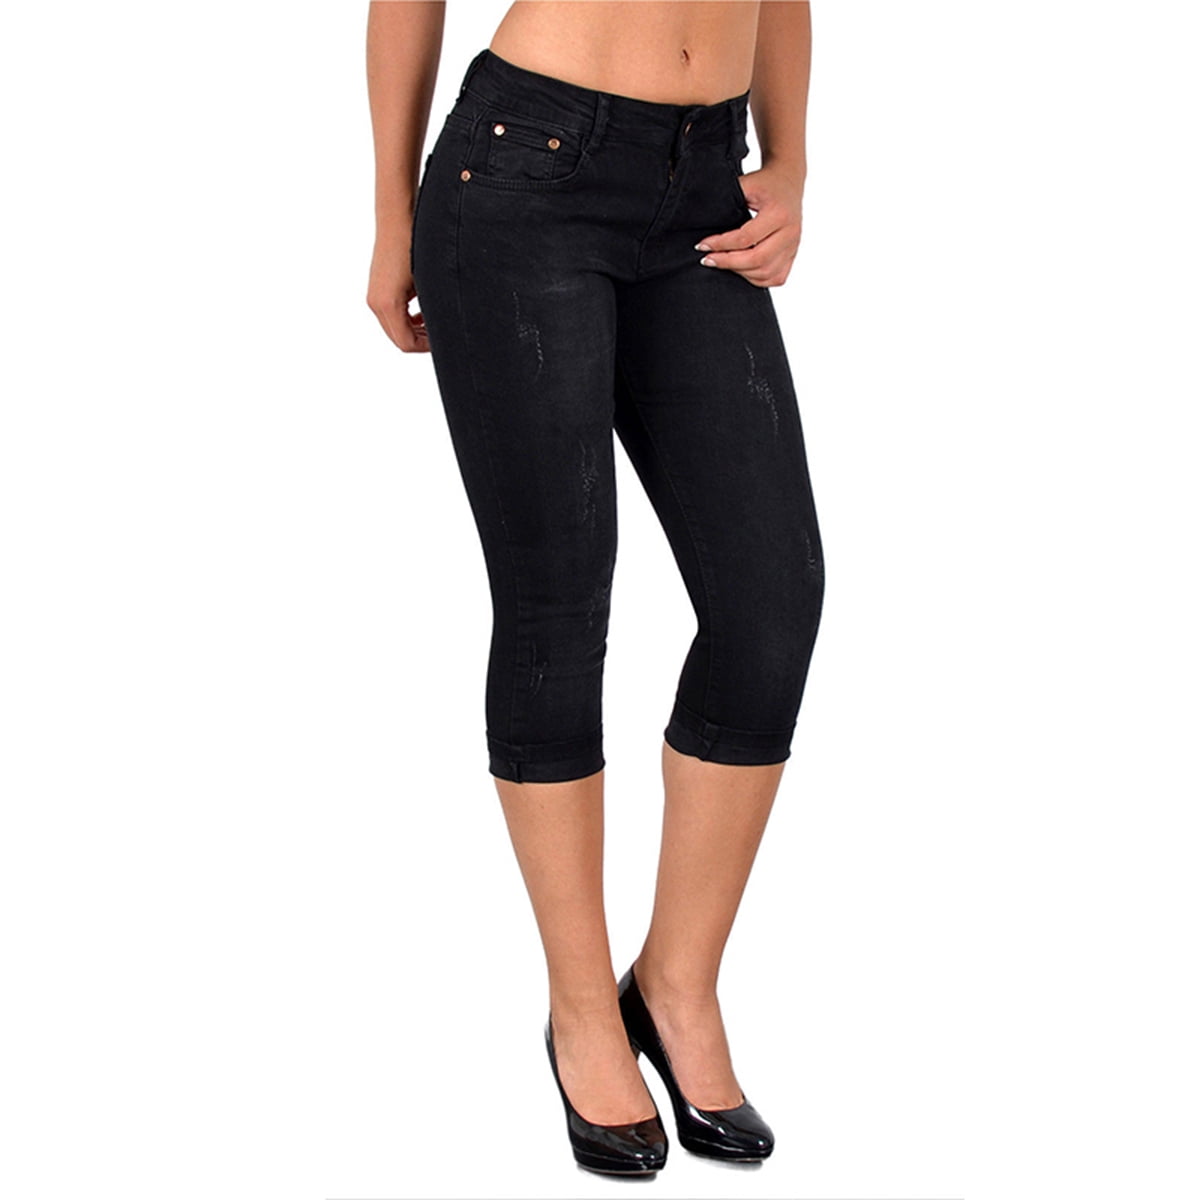 Lovaru - Women Elastic Leggings Denim Shorts - Walmart.com - Walmart.com